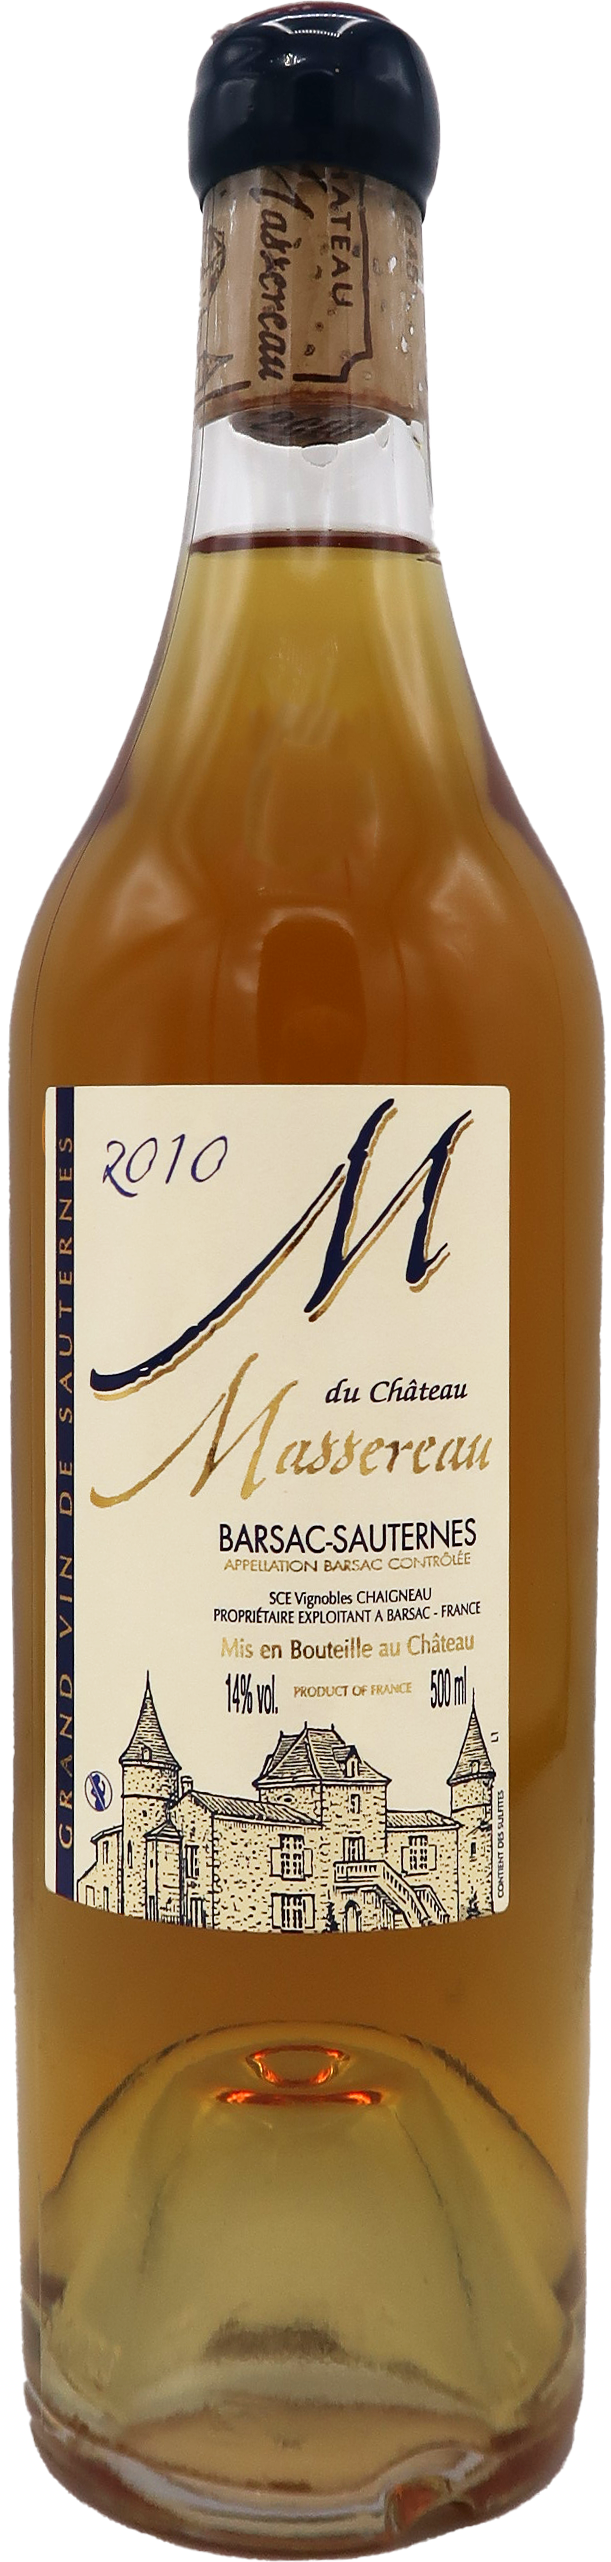 M du Château Massereau 2010 - Barsac-Sauternes